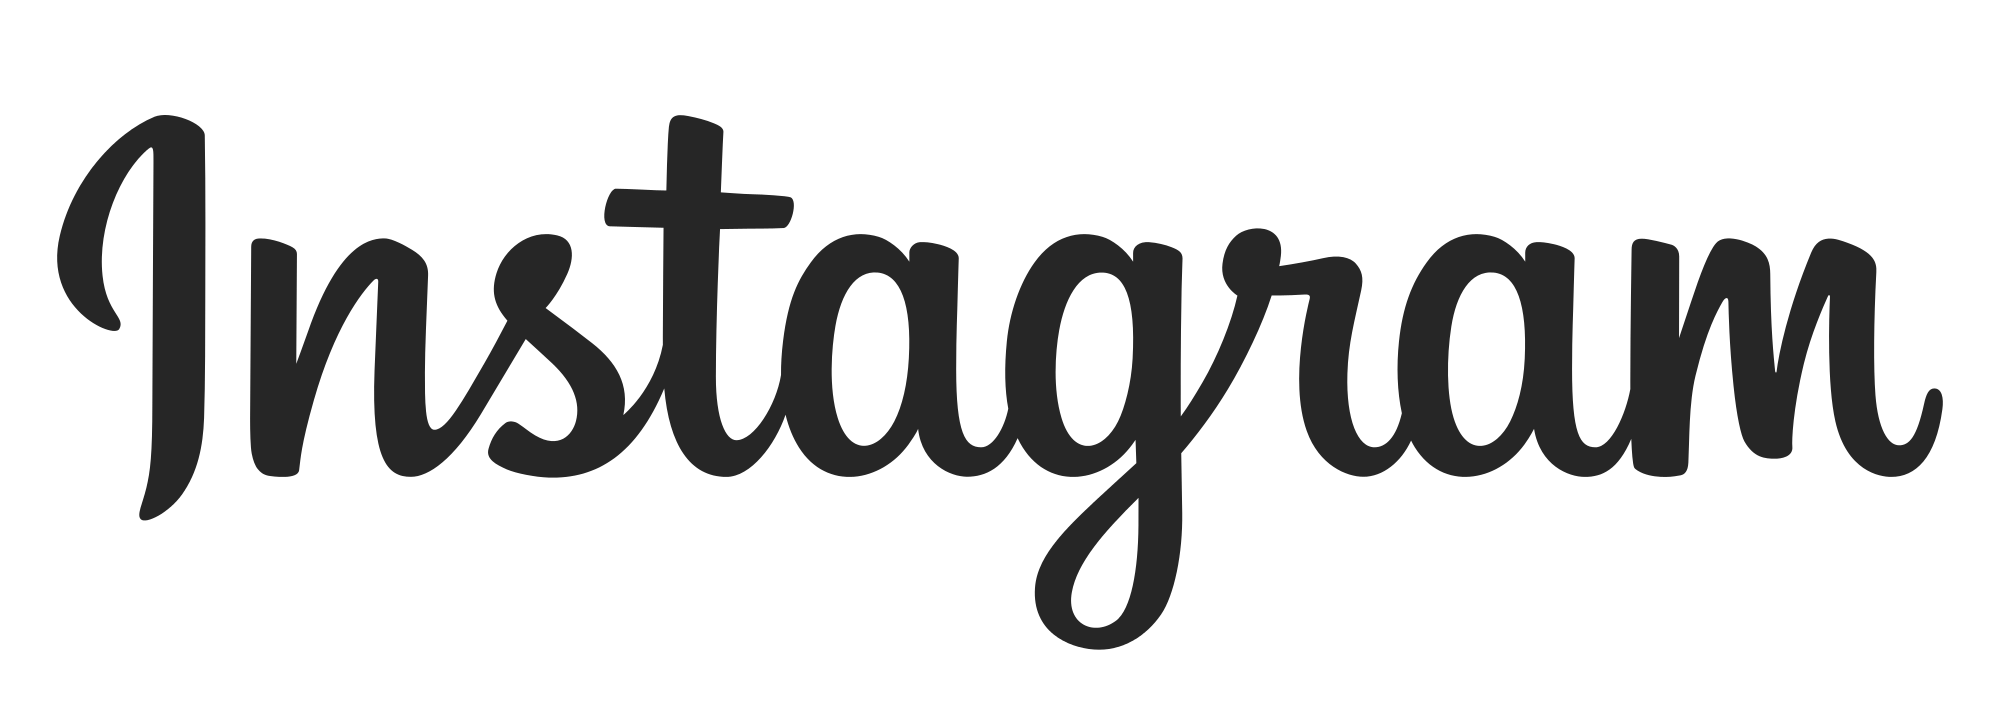 Instagram Ig logo PNG Transparentes Bild